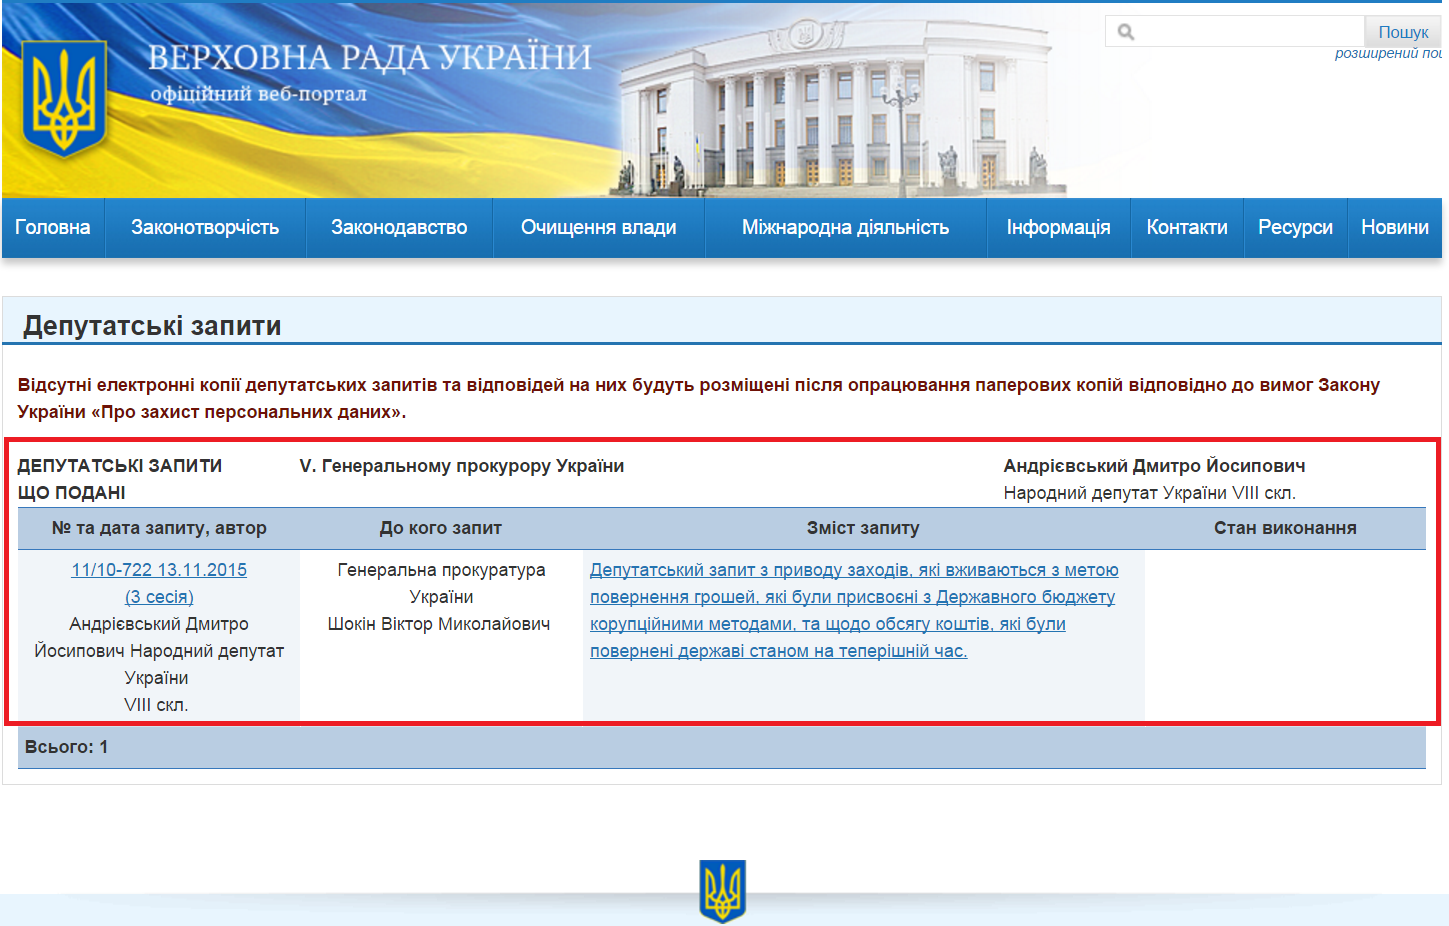 http://w1.c1.rada.gov.ua/pls/zweb2/wcadr43D?sklikannja=9&kodtip=7&rejim=1&KOD8011=15839